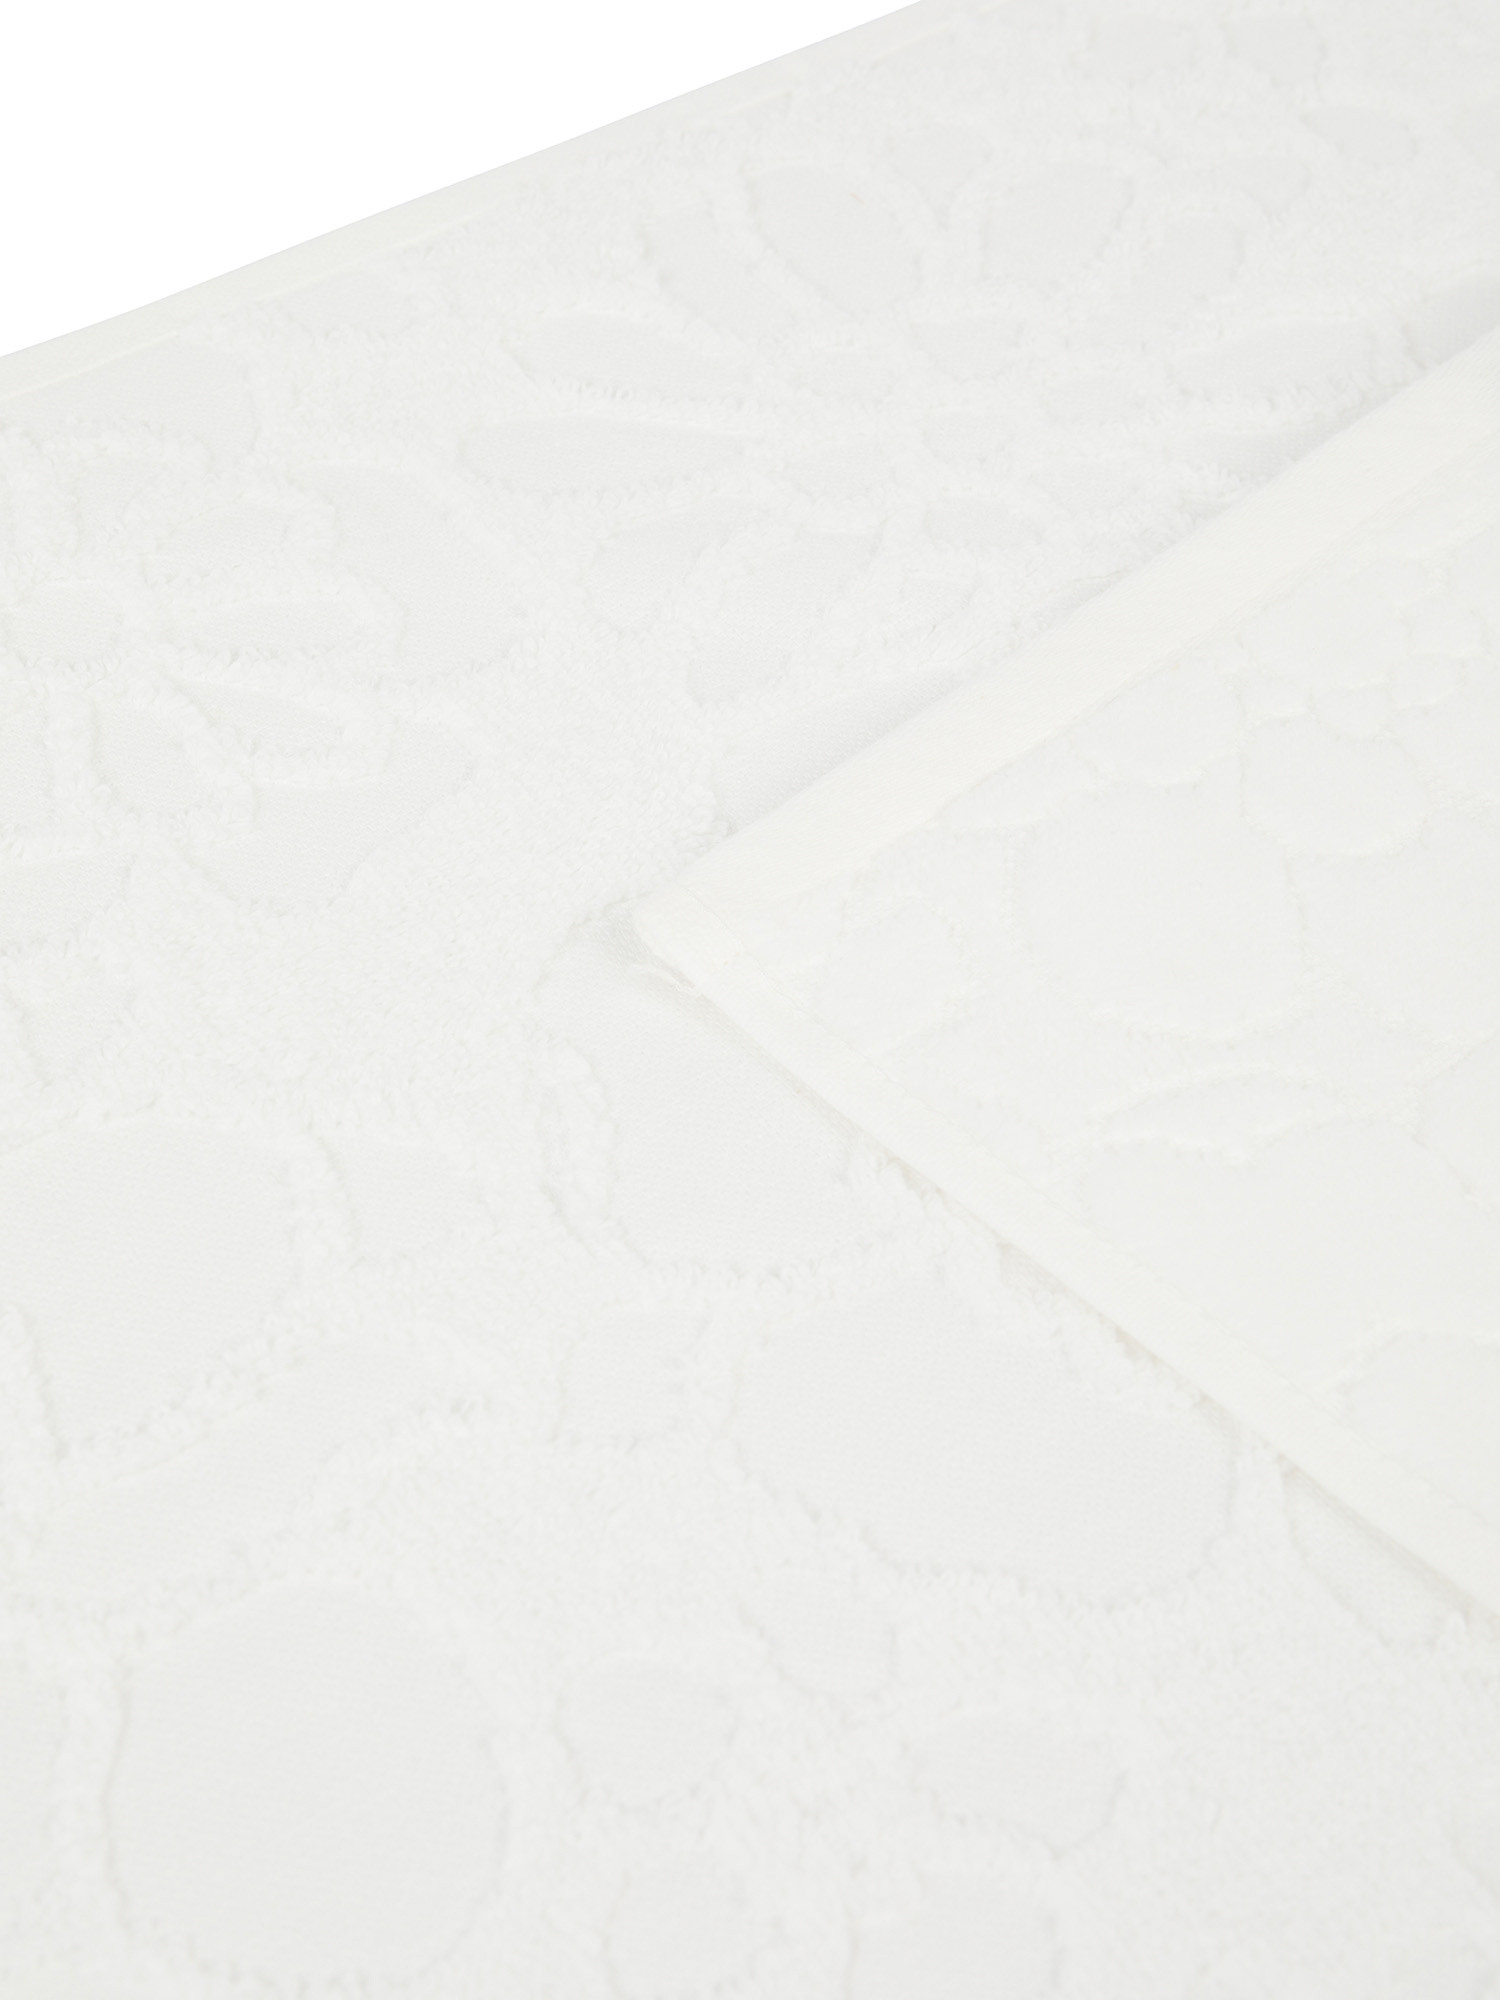 Asciugamano cotone velour motivo floreale a rilievo, Bianco, large image number 2